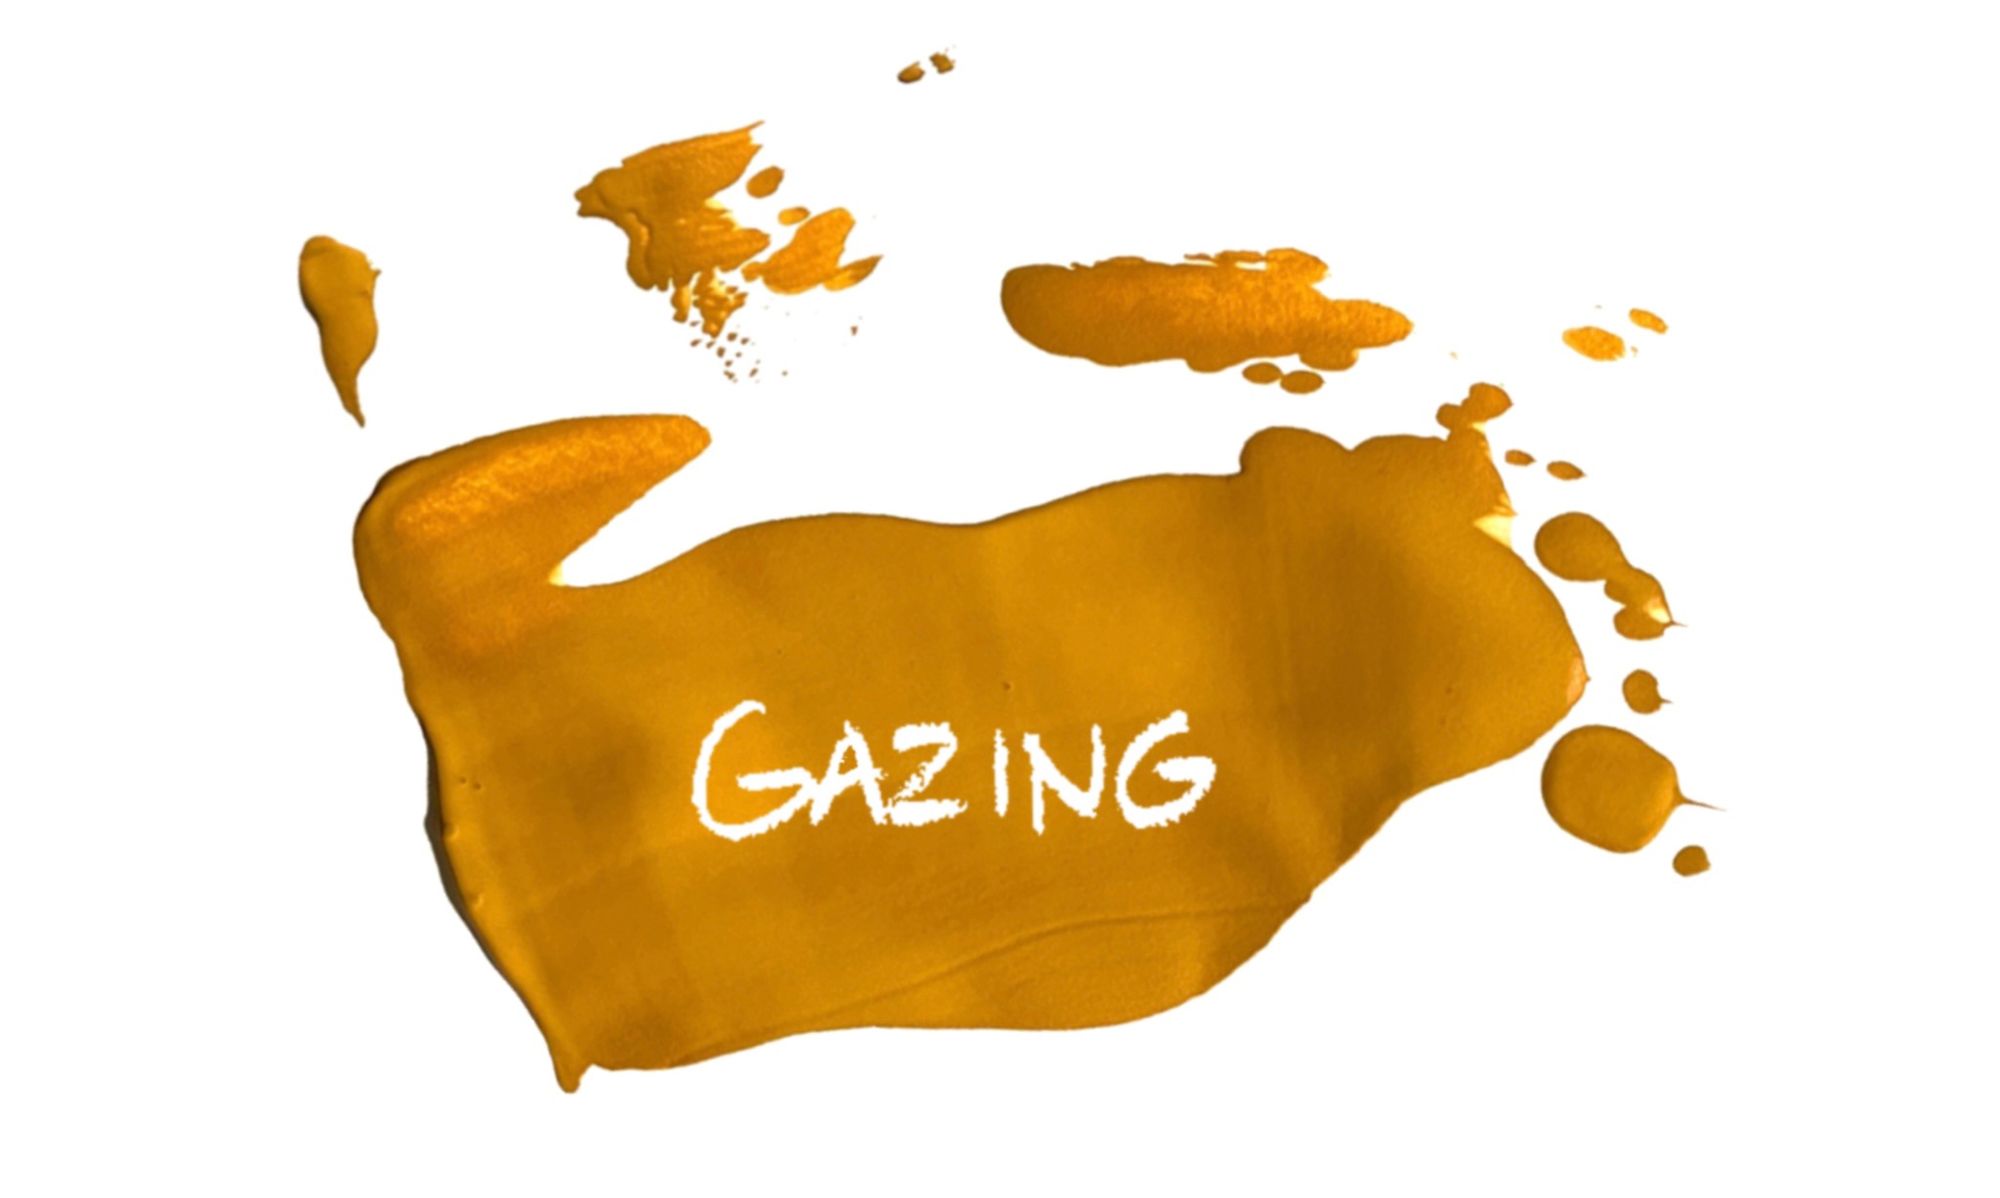 Aug 2022: Gazing